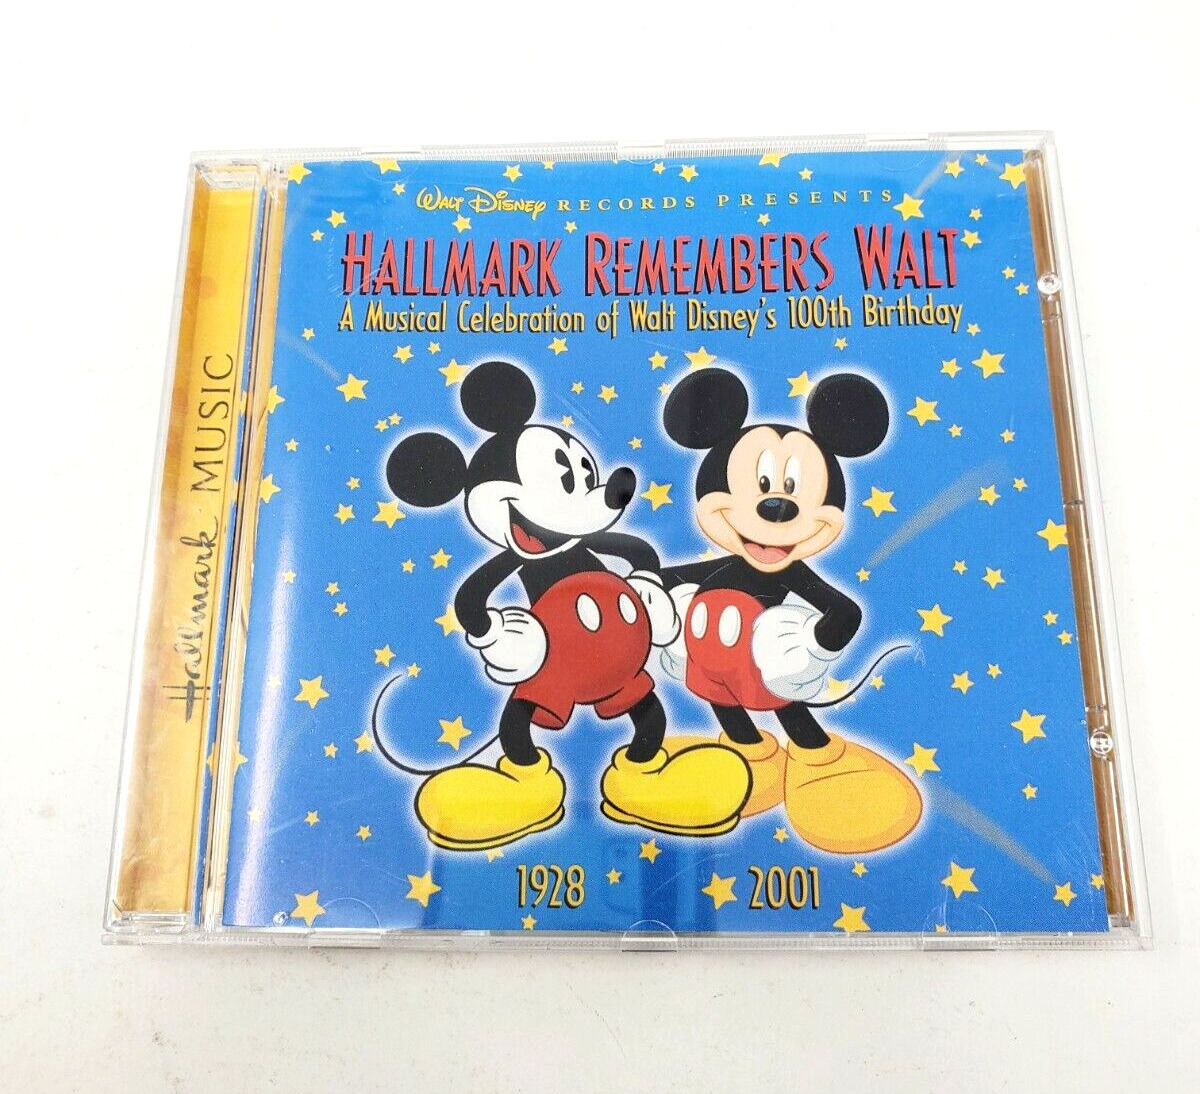 Hallmark Remembers Walt, A Celebration of Disney's 100th Birthday (CD)